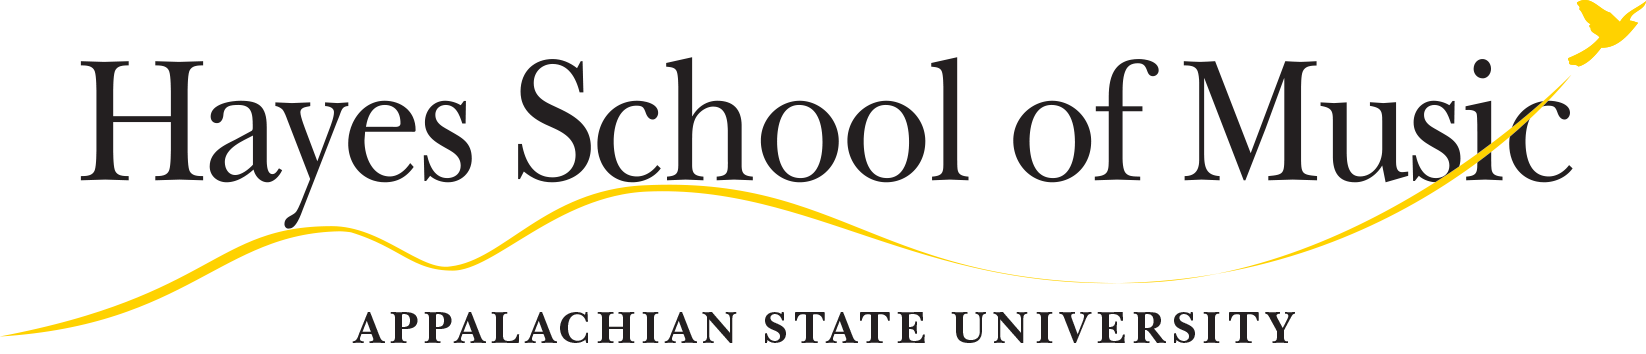 Hayes School of Music at Appalachian State University logo